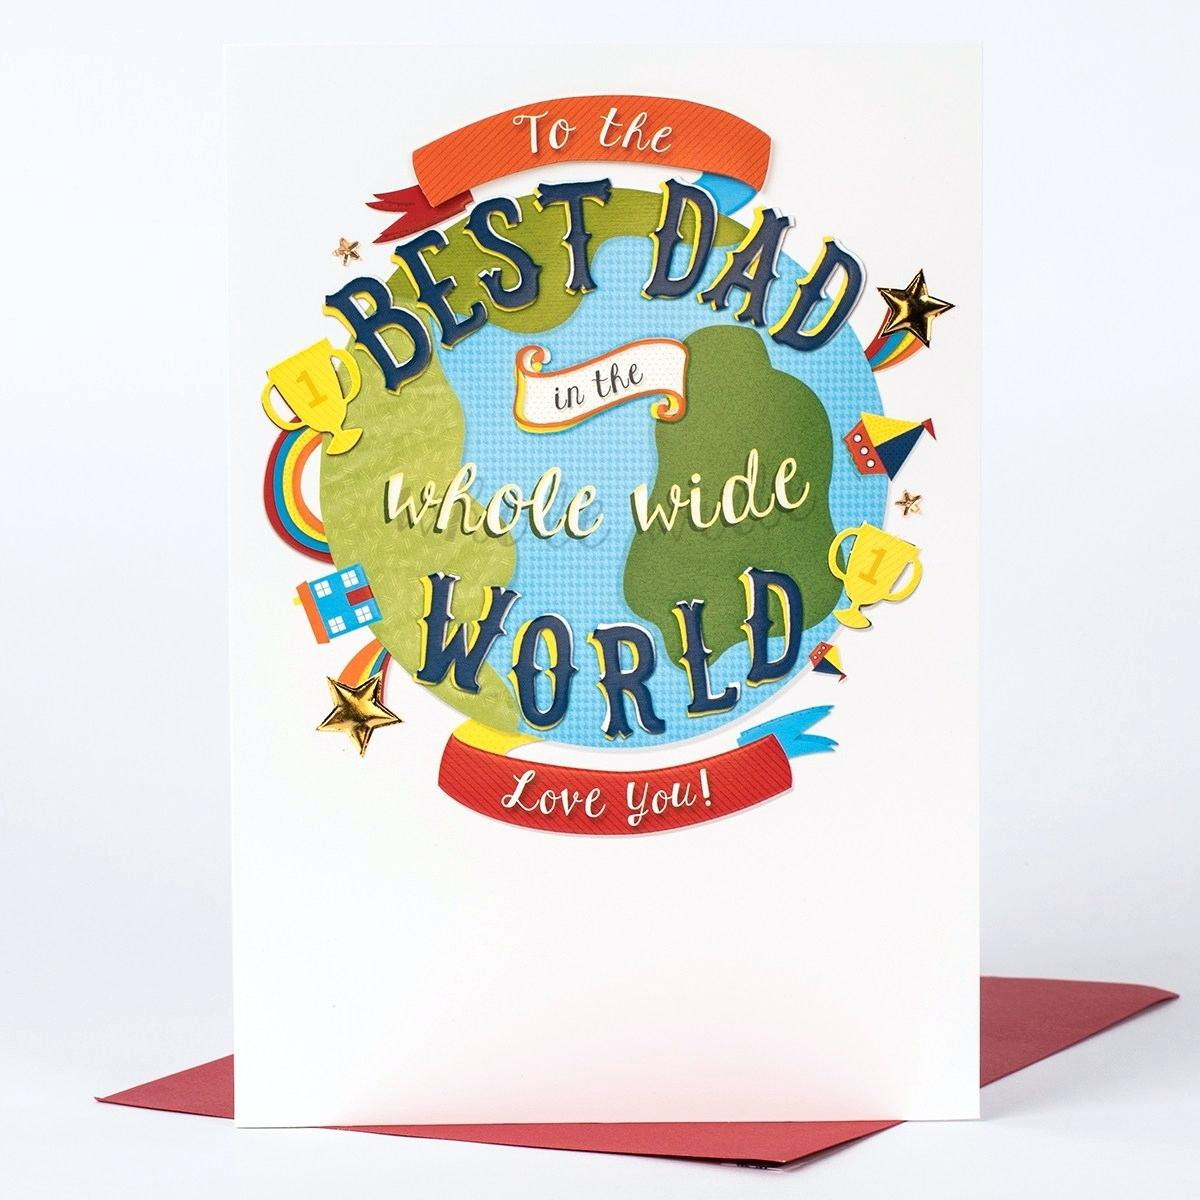 Dad Birthday Card Ideas Birthday Cards For Dad Card Ideas From Toddler Everybodyfitness